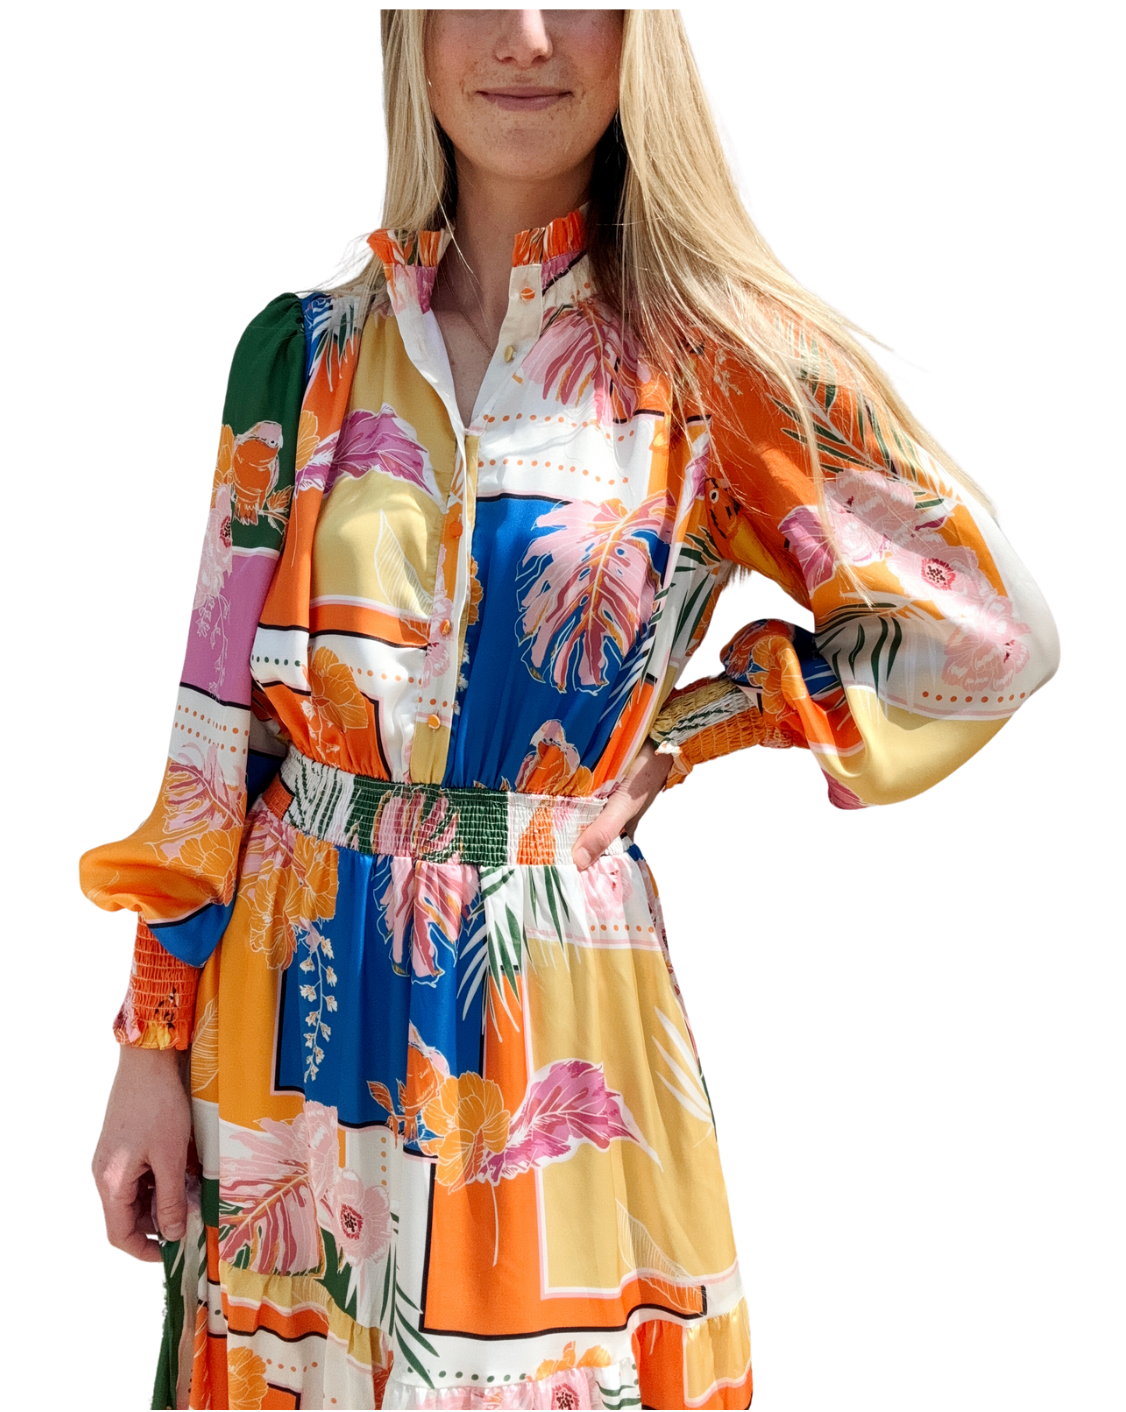 Tropical Leaf Satin Maxi Dress